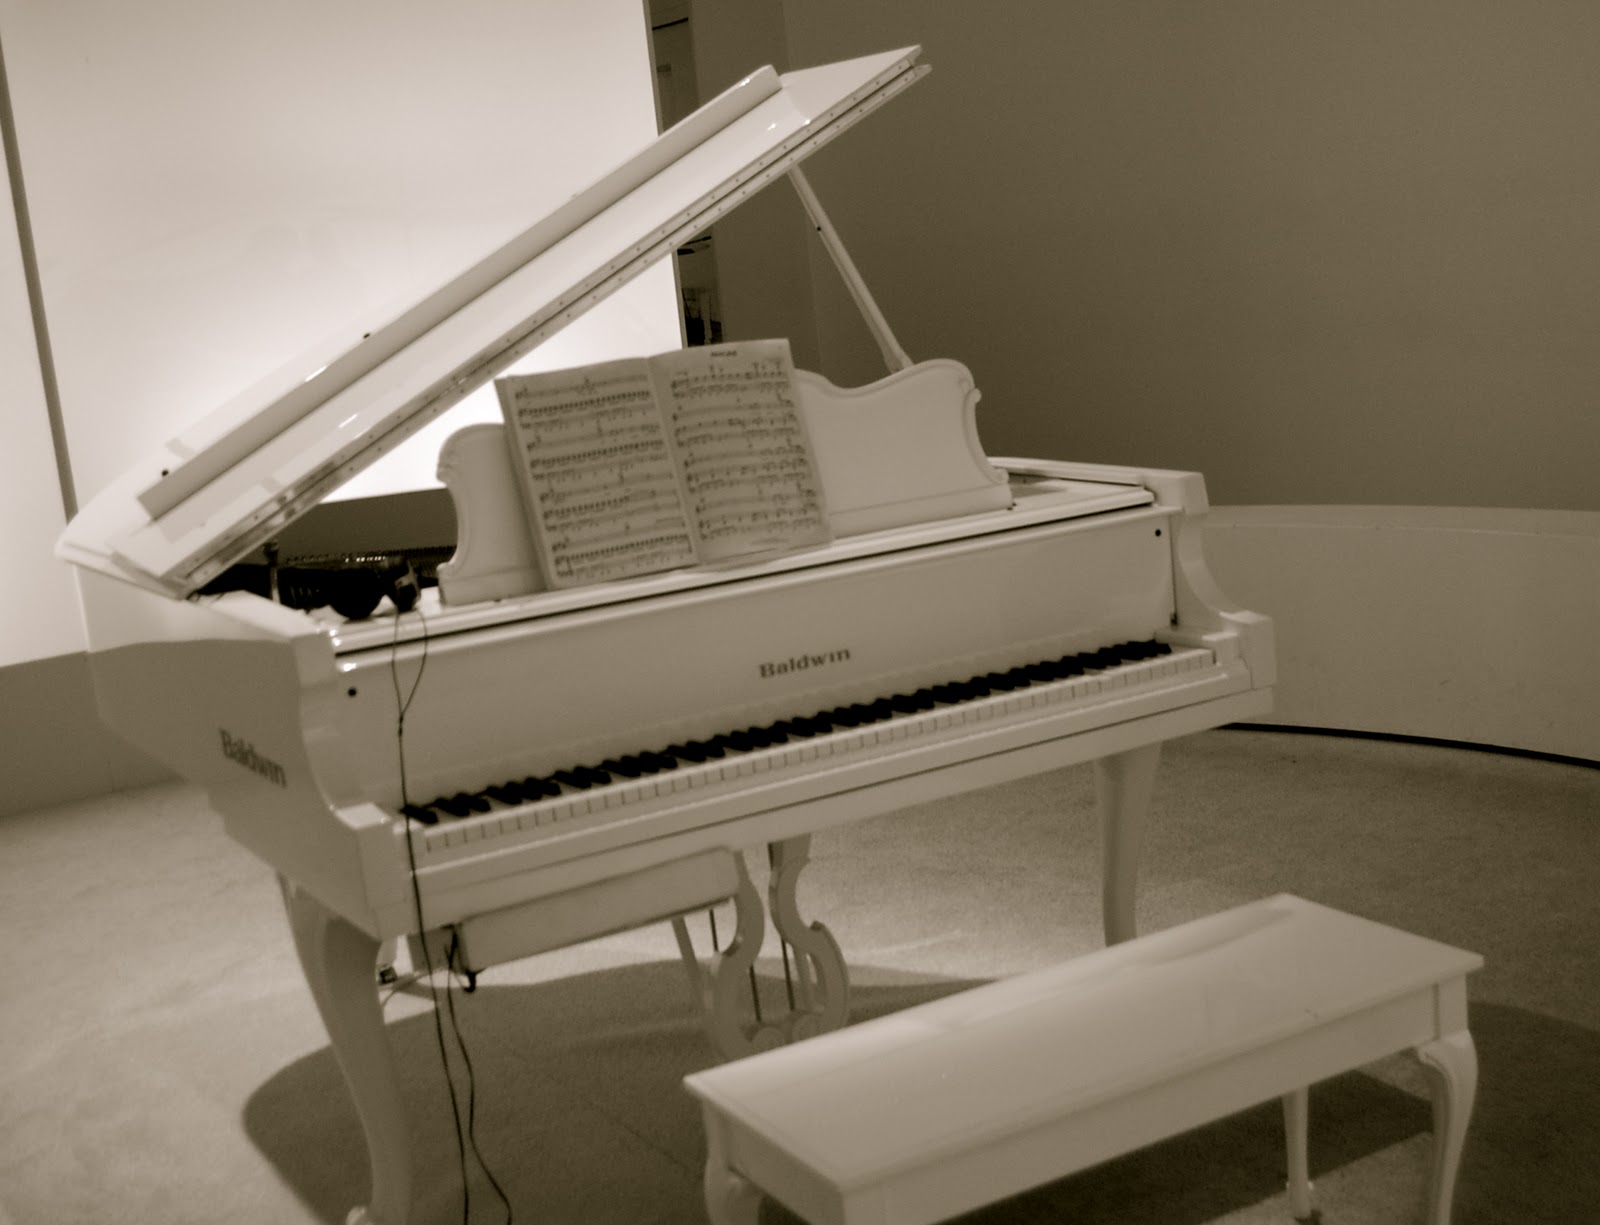 John+lennon+imagine+sheet+music+piano